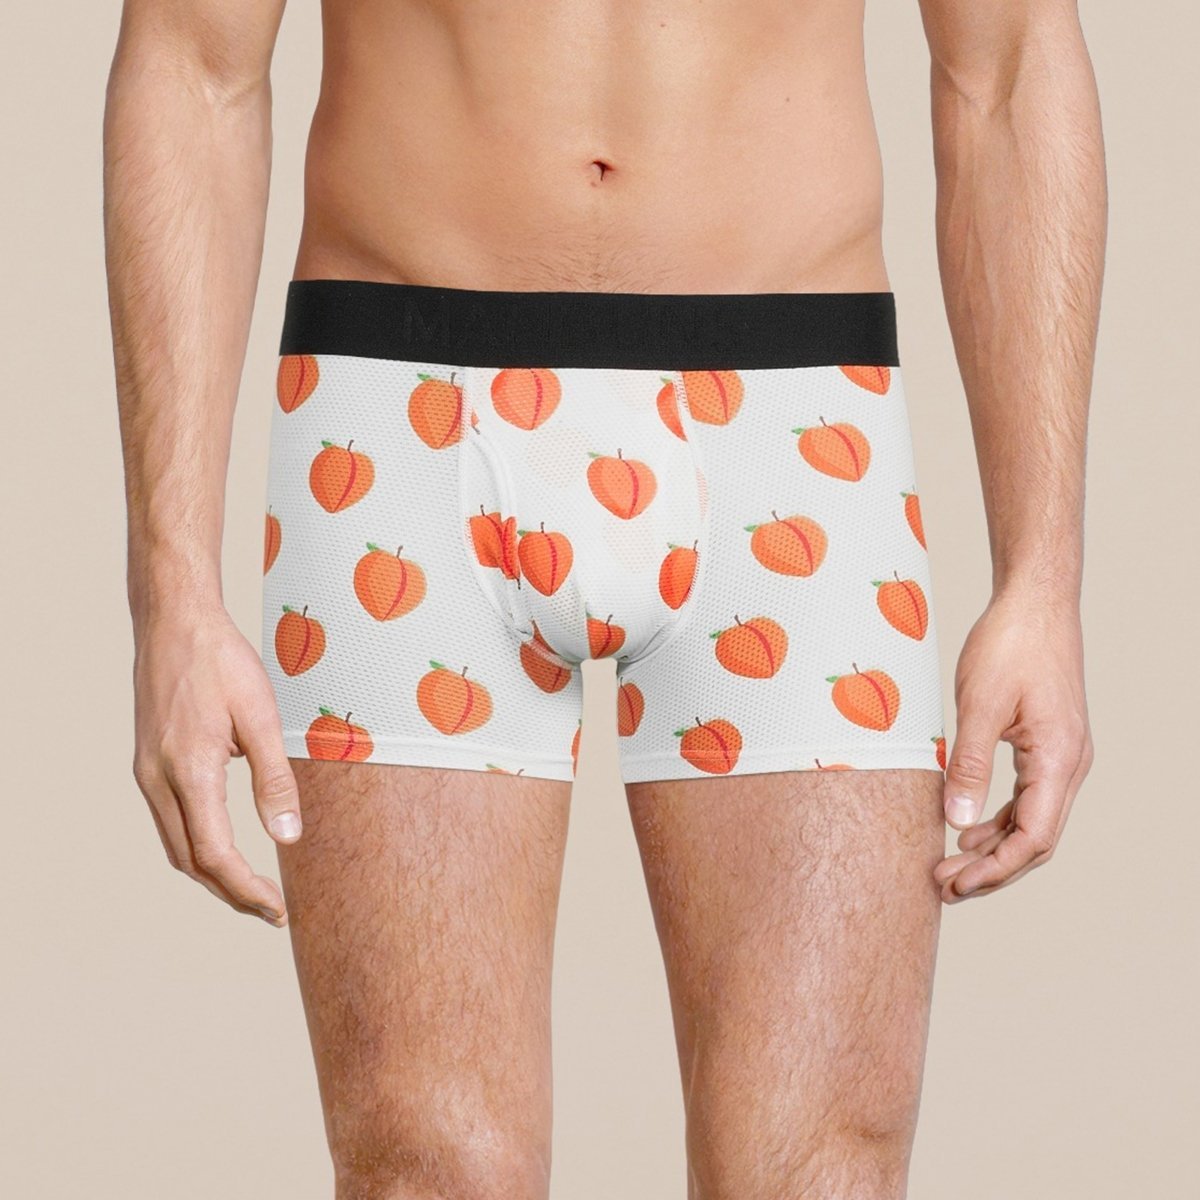 MANBUNS Peach Men's Peach Boxer Trunk Underwear with Pouch